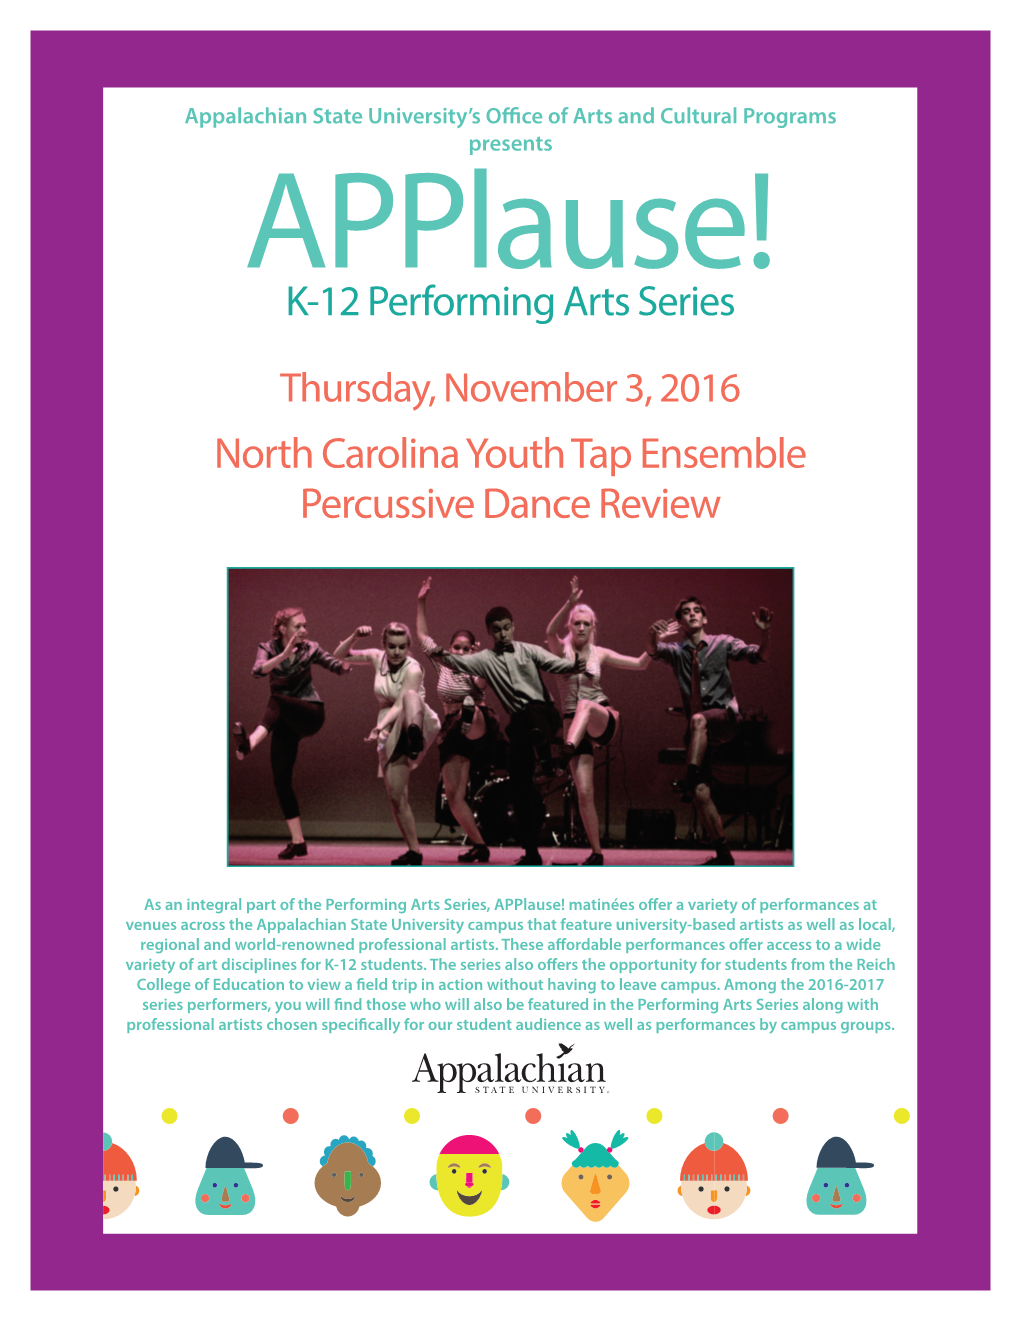 North Carolina Youth Tap Ensemble Percussive Dance Review